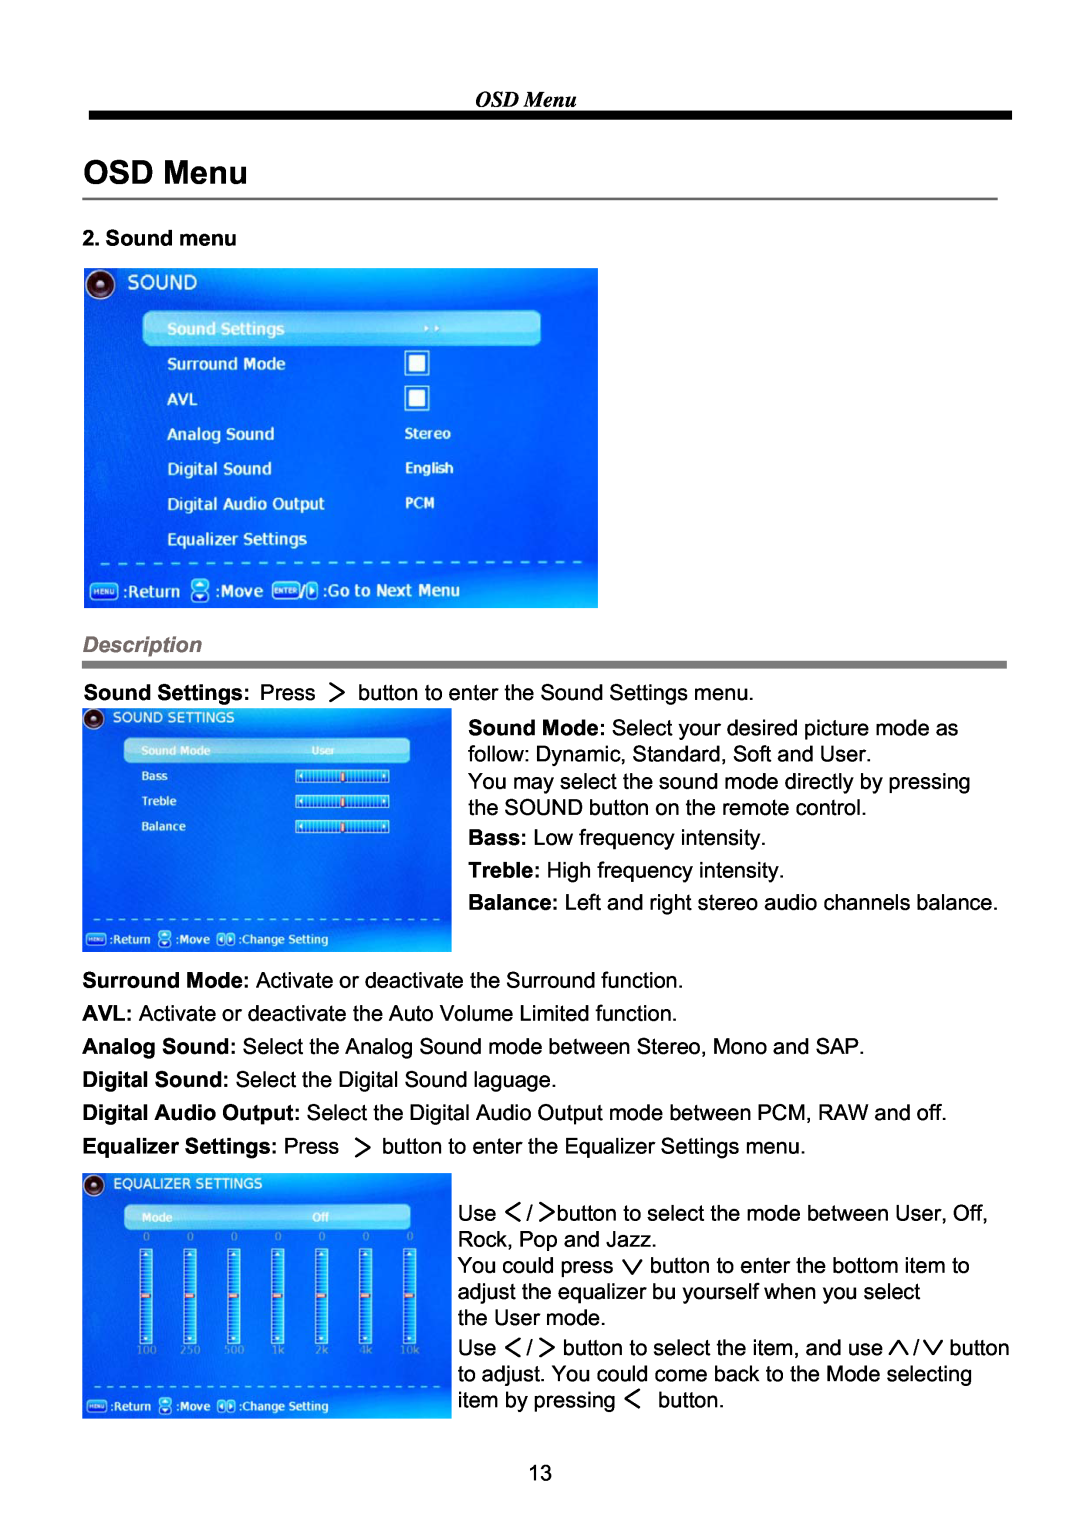 RCA RLED4664A manual OSD Menu, Sound menu, Description, Sound Settings Press, Equalizer Settings Press 